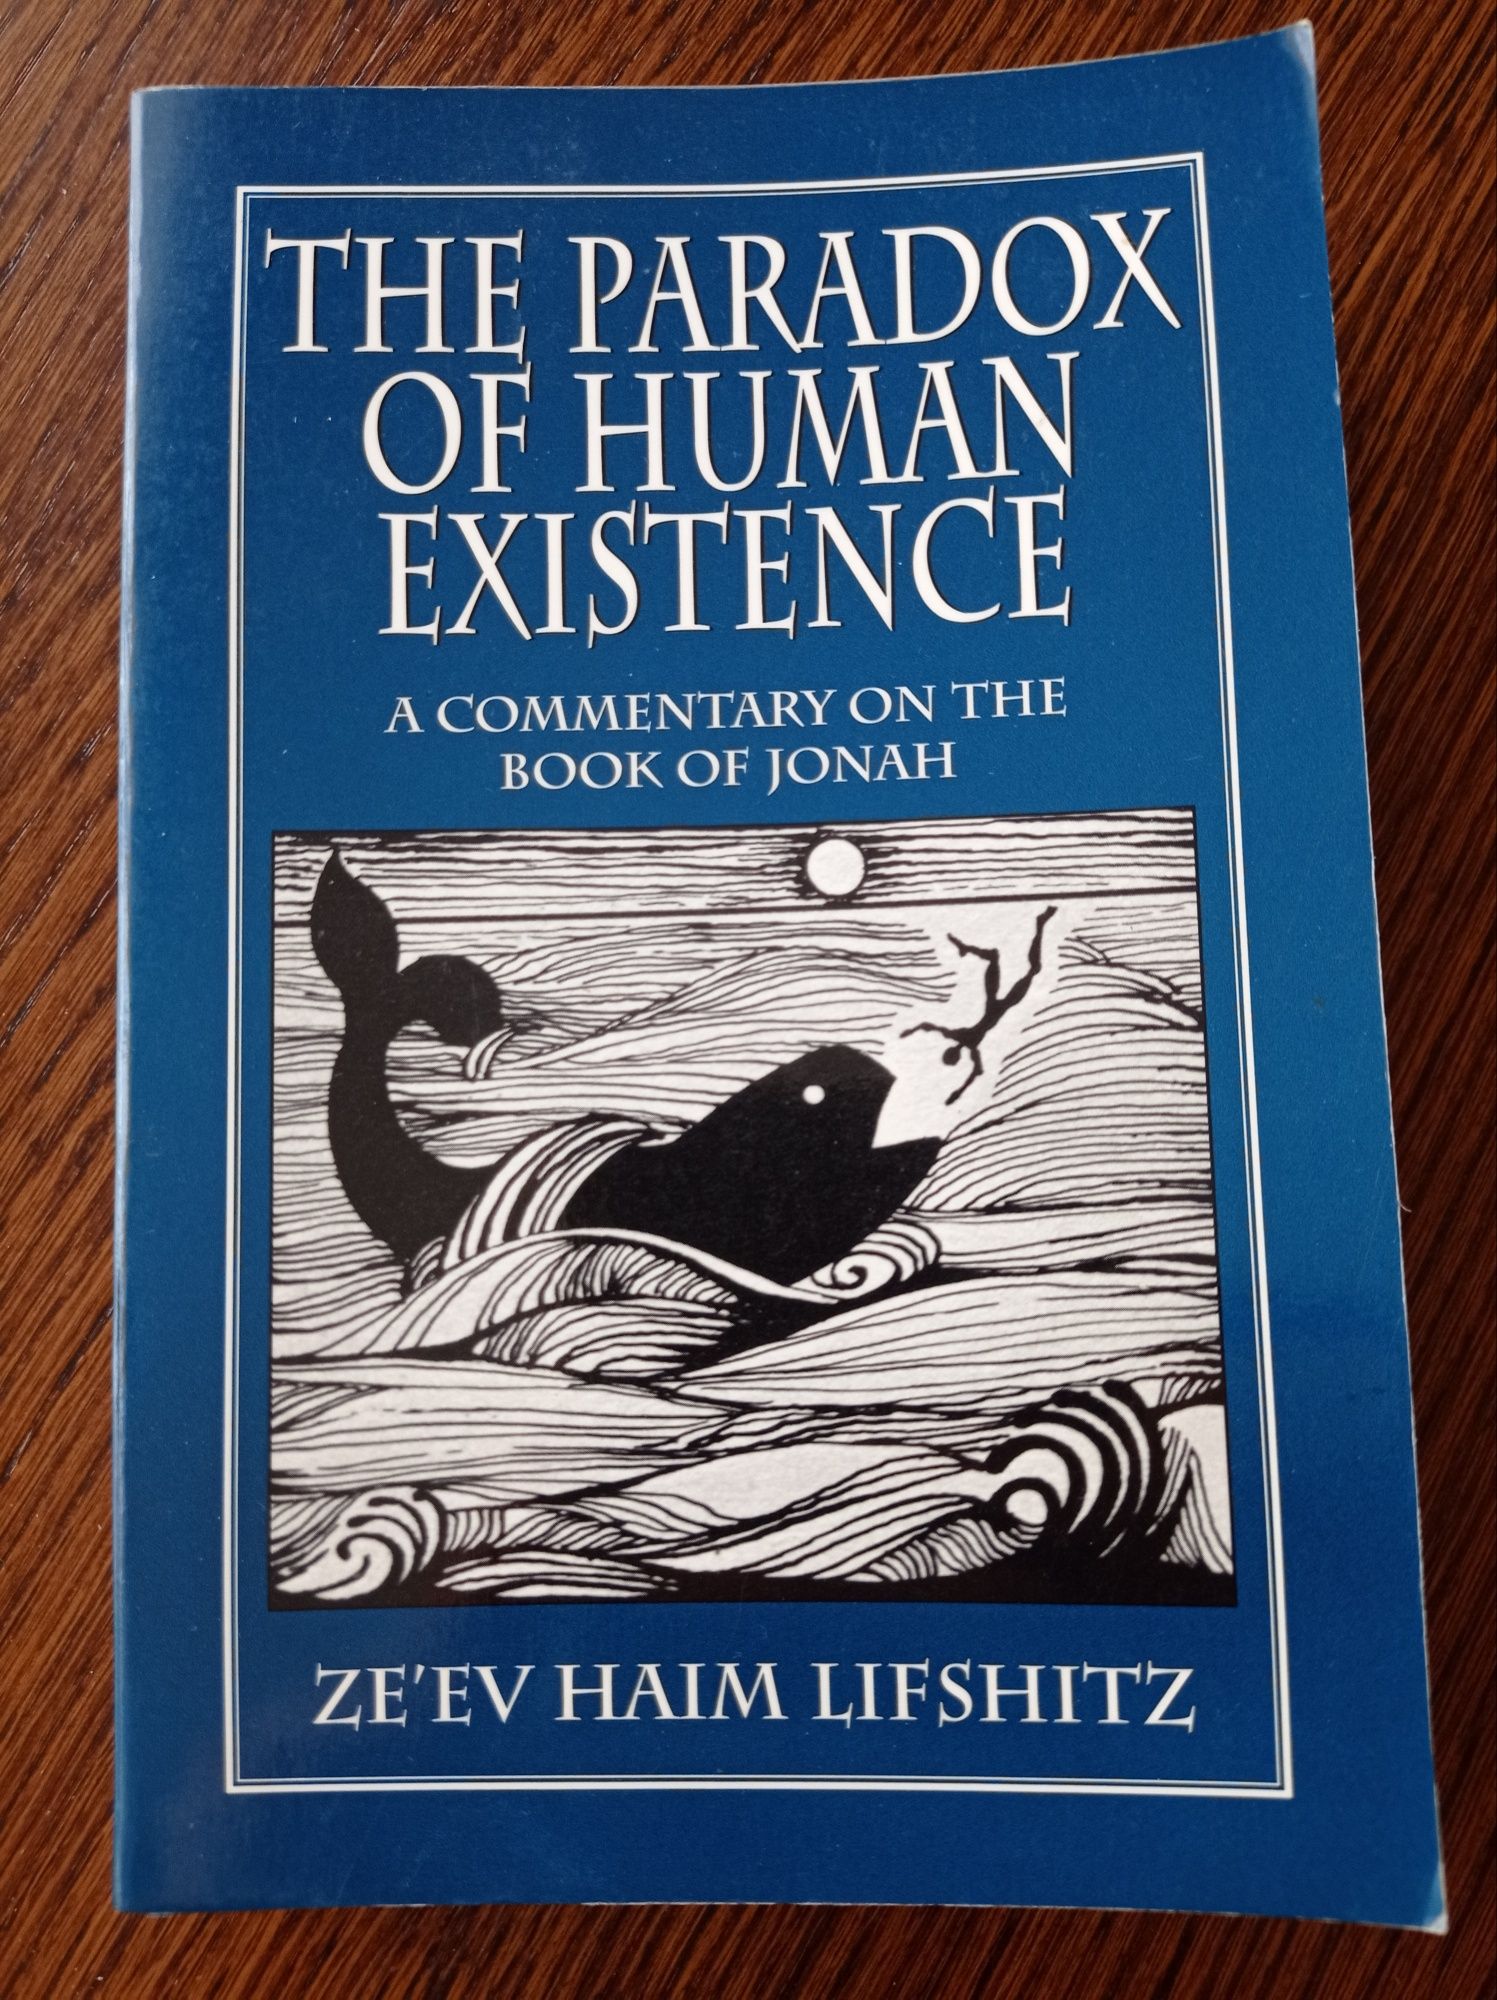 Książka "The paradox od human existence"